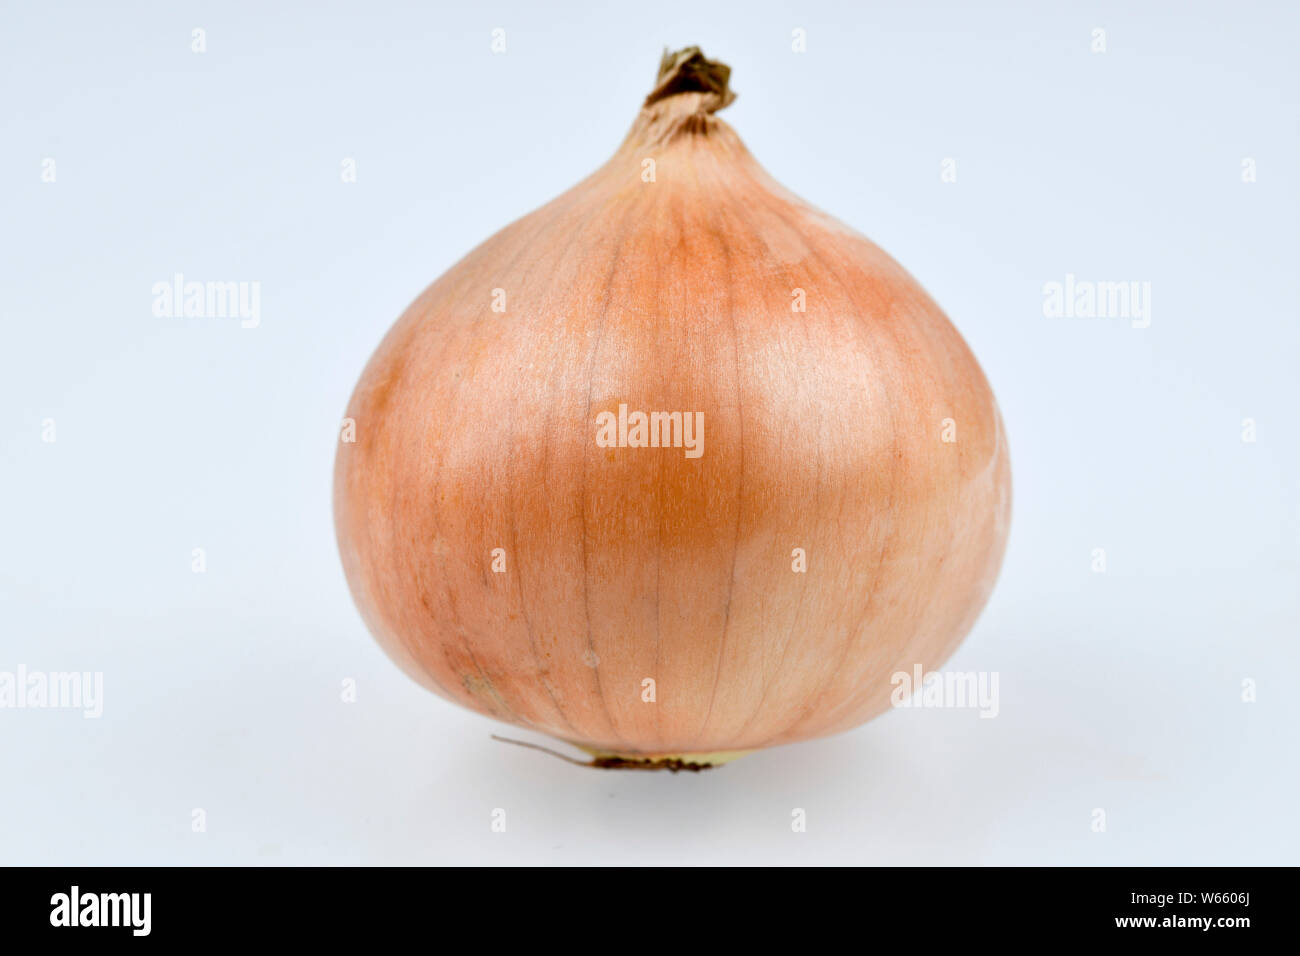 yellow onion Stock Photo